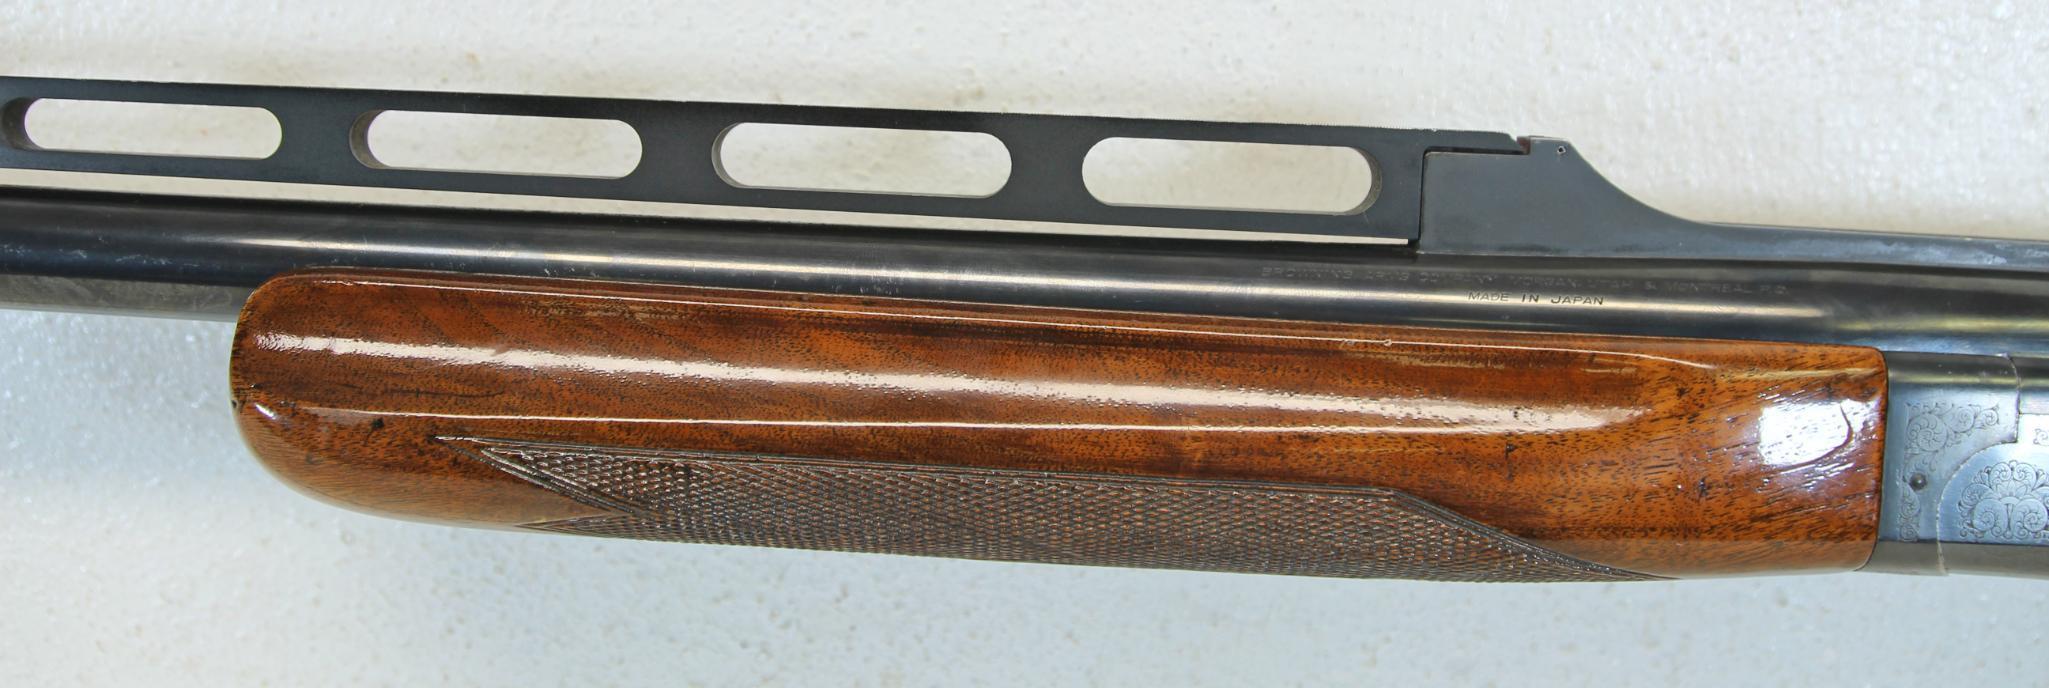 Browning BT-99 Plus 12 Ga. Single Barrel Single Shot Trap Shotgun Fully Adjustable Stock and Comb...